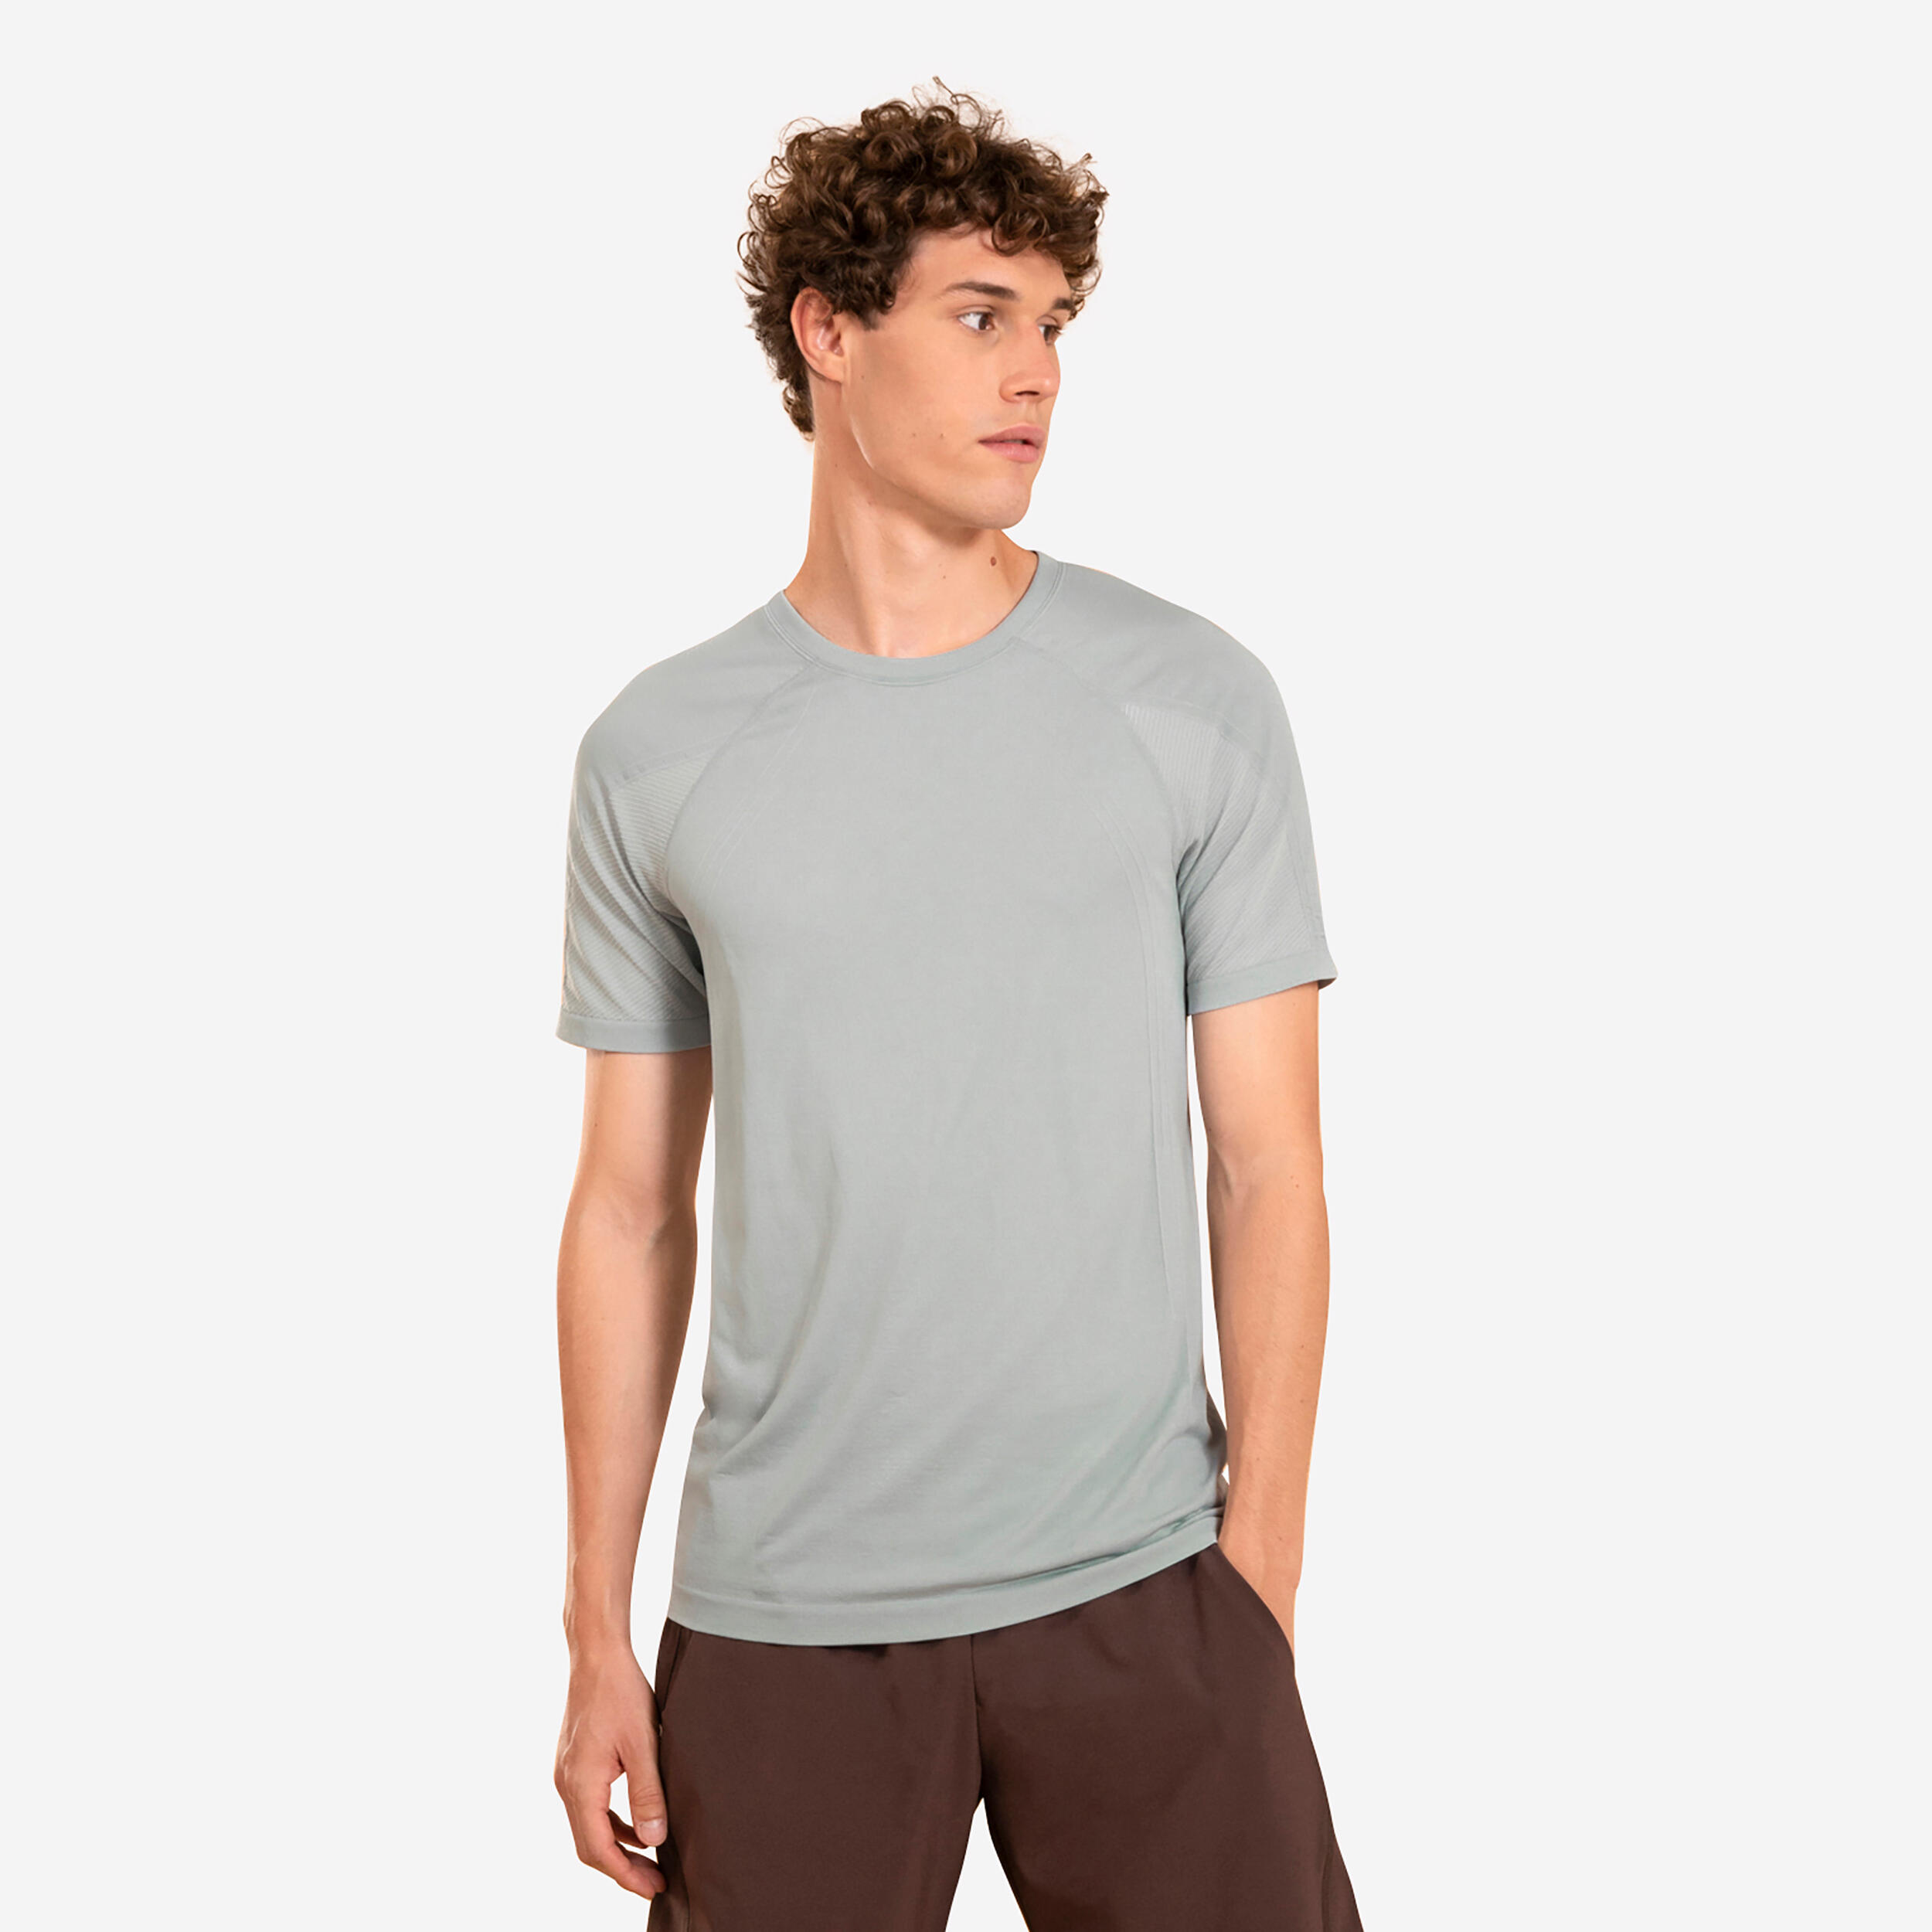 Decathlon | T-shirt uomo yoga slim fit misto cotone grigio chiaro |  Kimjaly